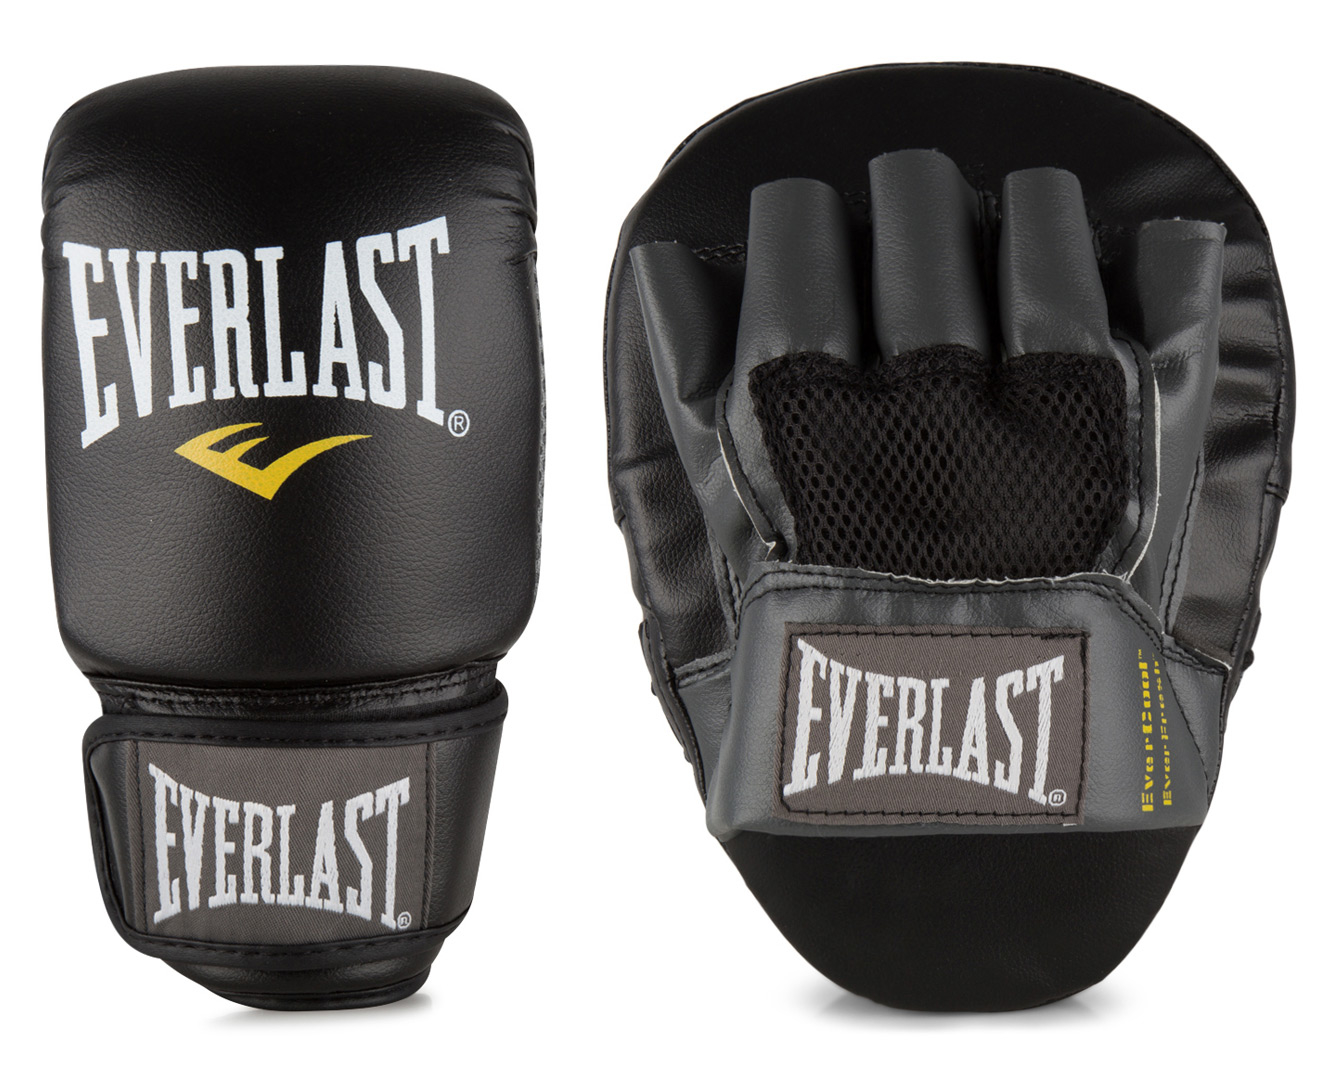 Everlast Glove & Mitt Combo Pack - Black